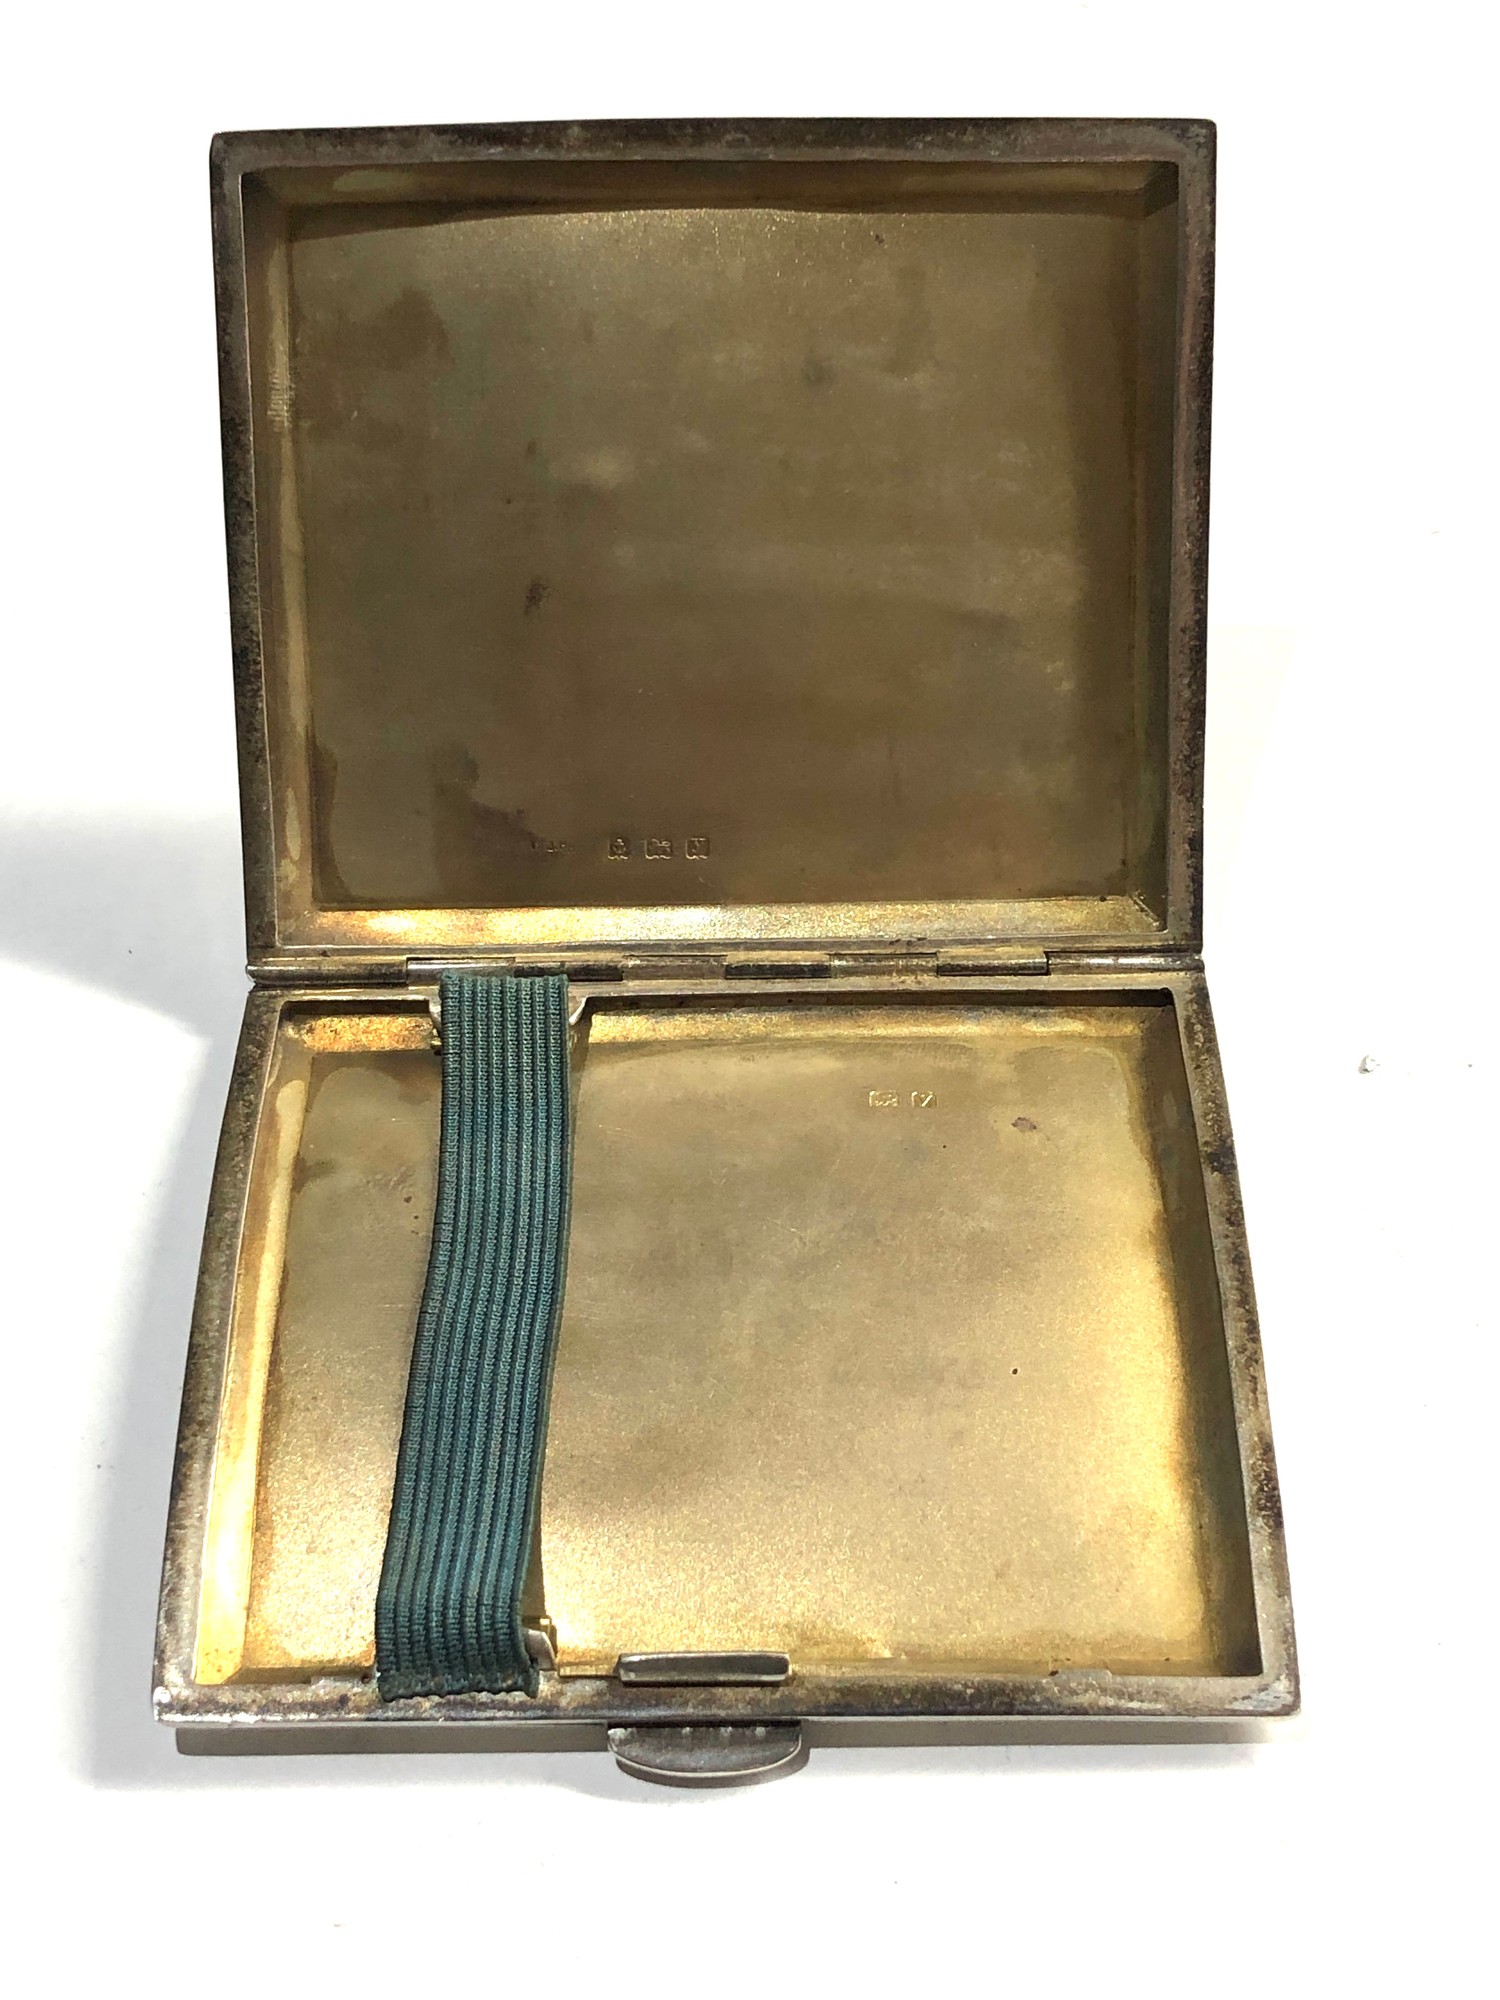 Silver cigarette case Birmingham silver hallmarks weight 80g - Image 3 of 3